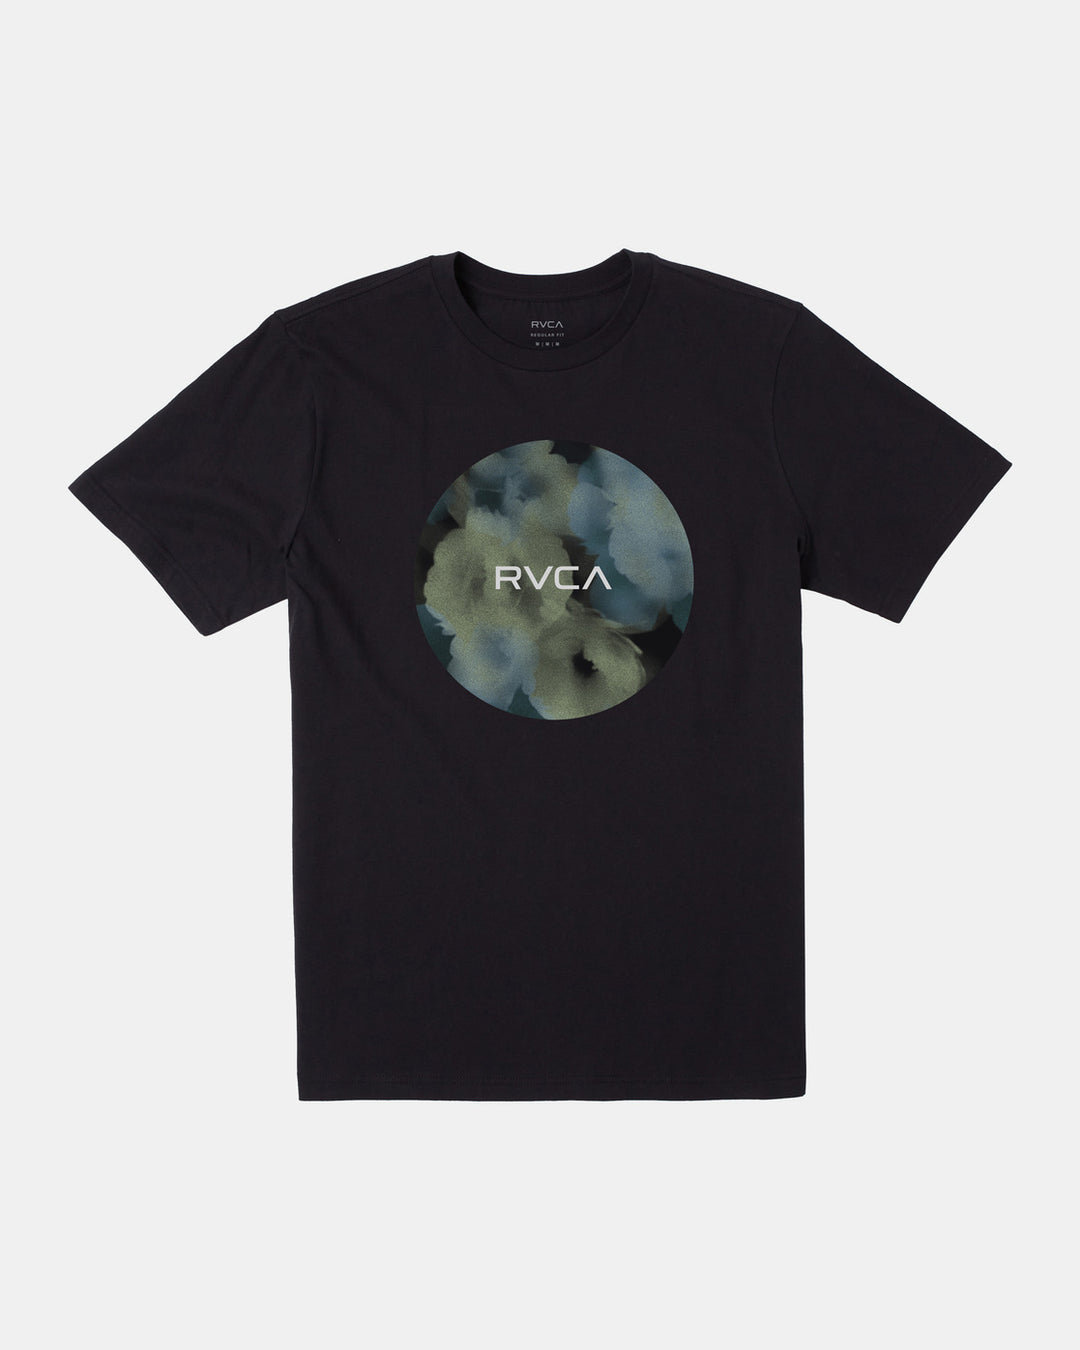 RVCA Motors T-Shirt - Black - Sun Diego Boardshop